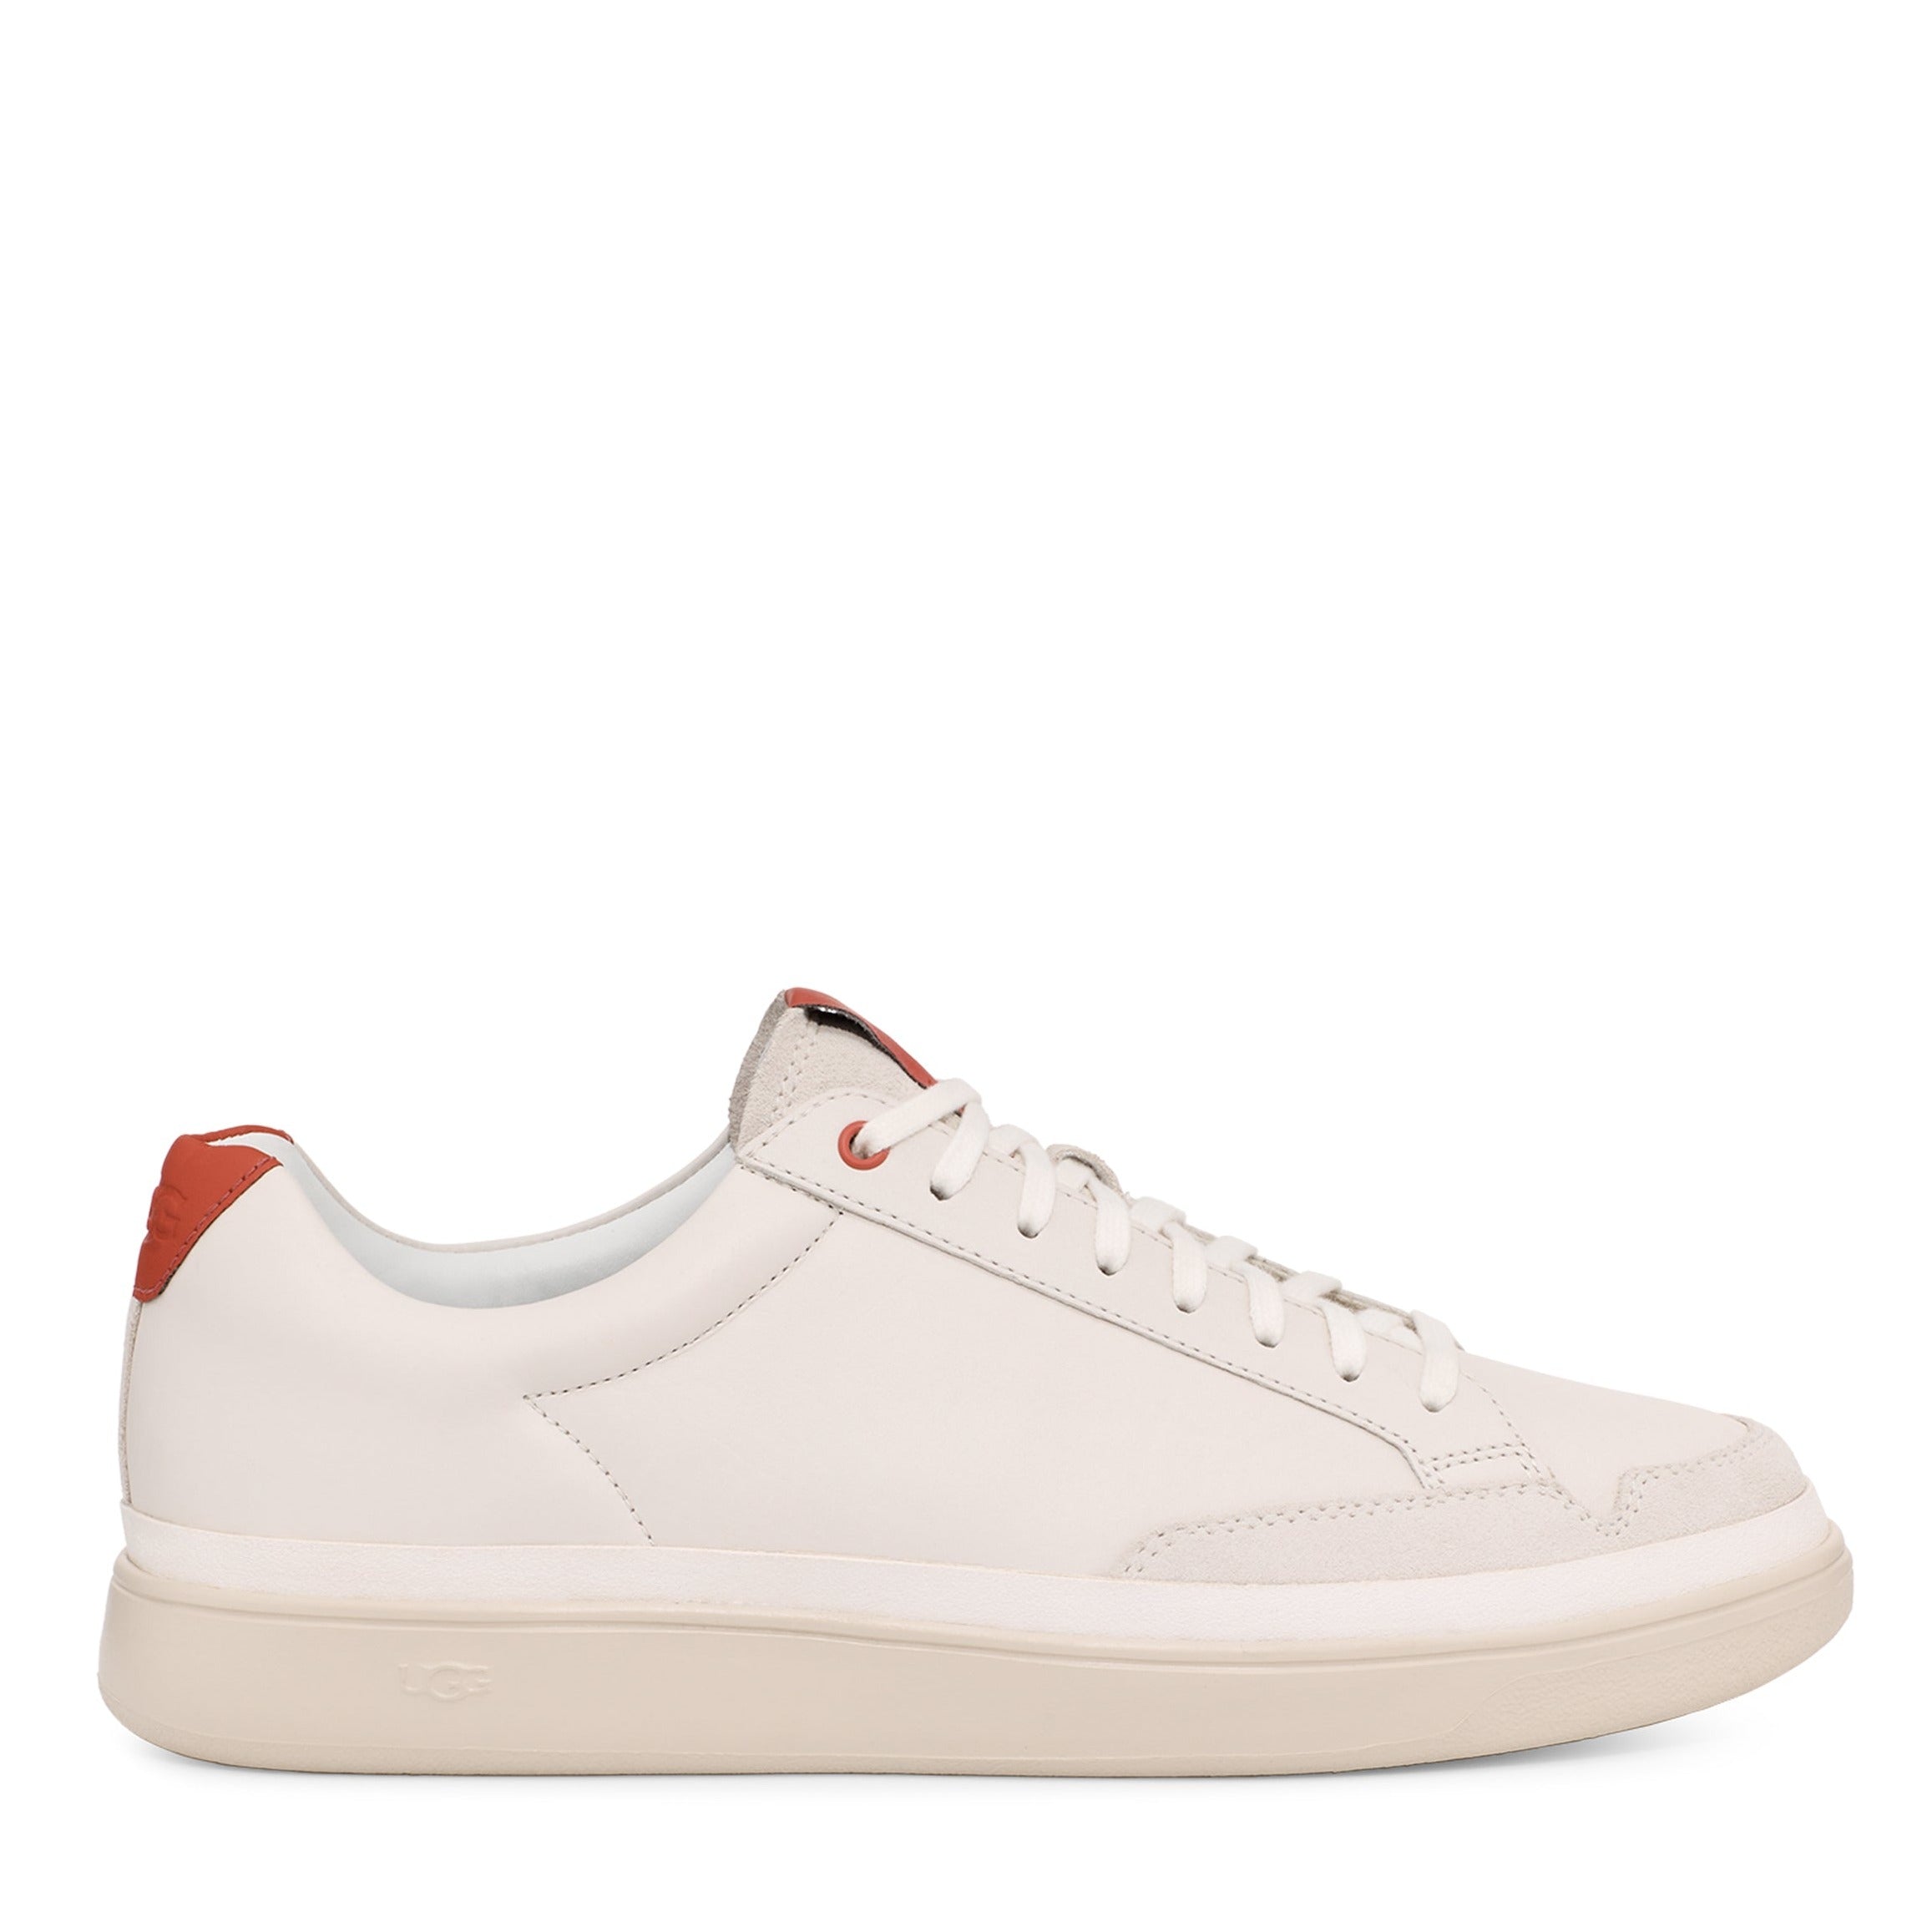 Sample UGG South Bay Sneaker Low Sneaker White Sienna 8 